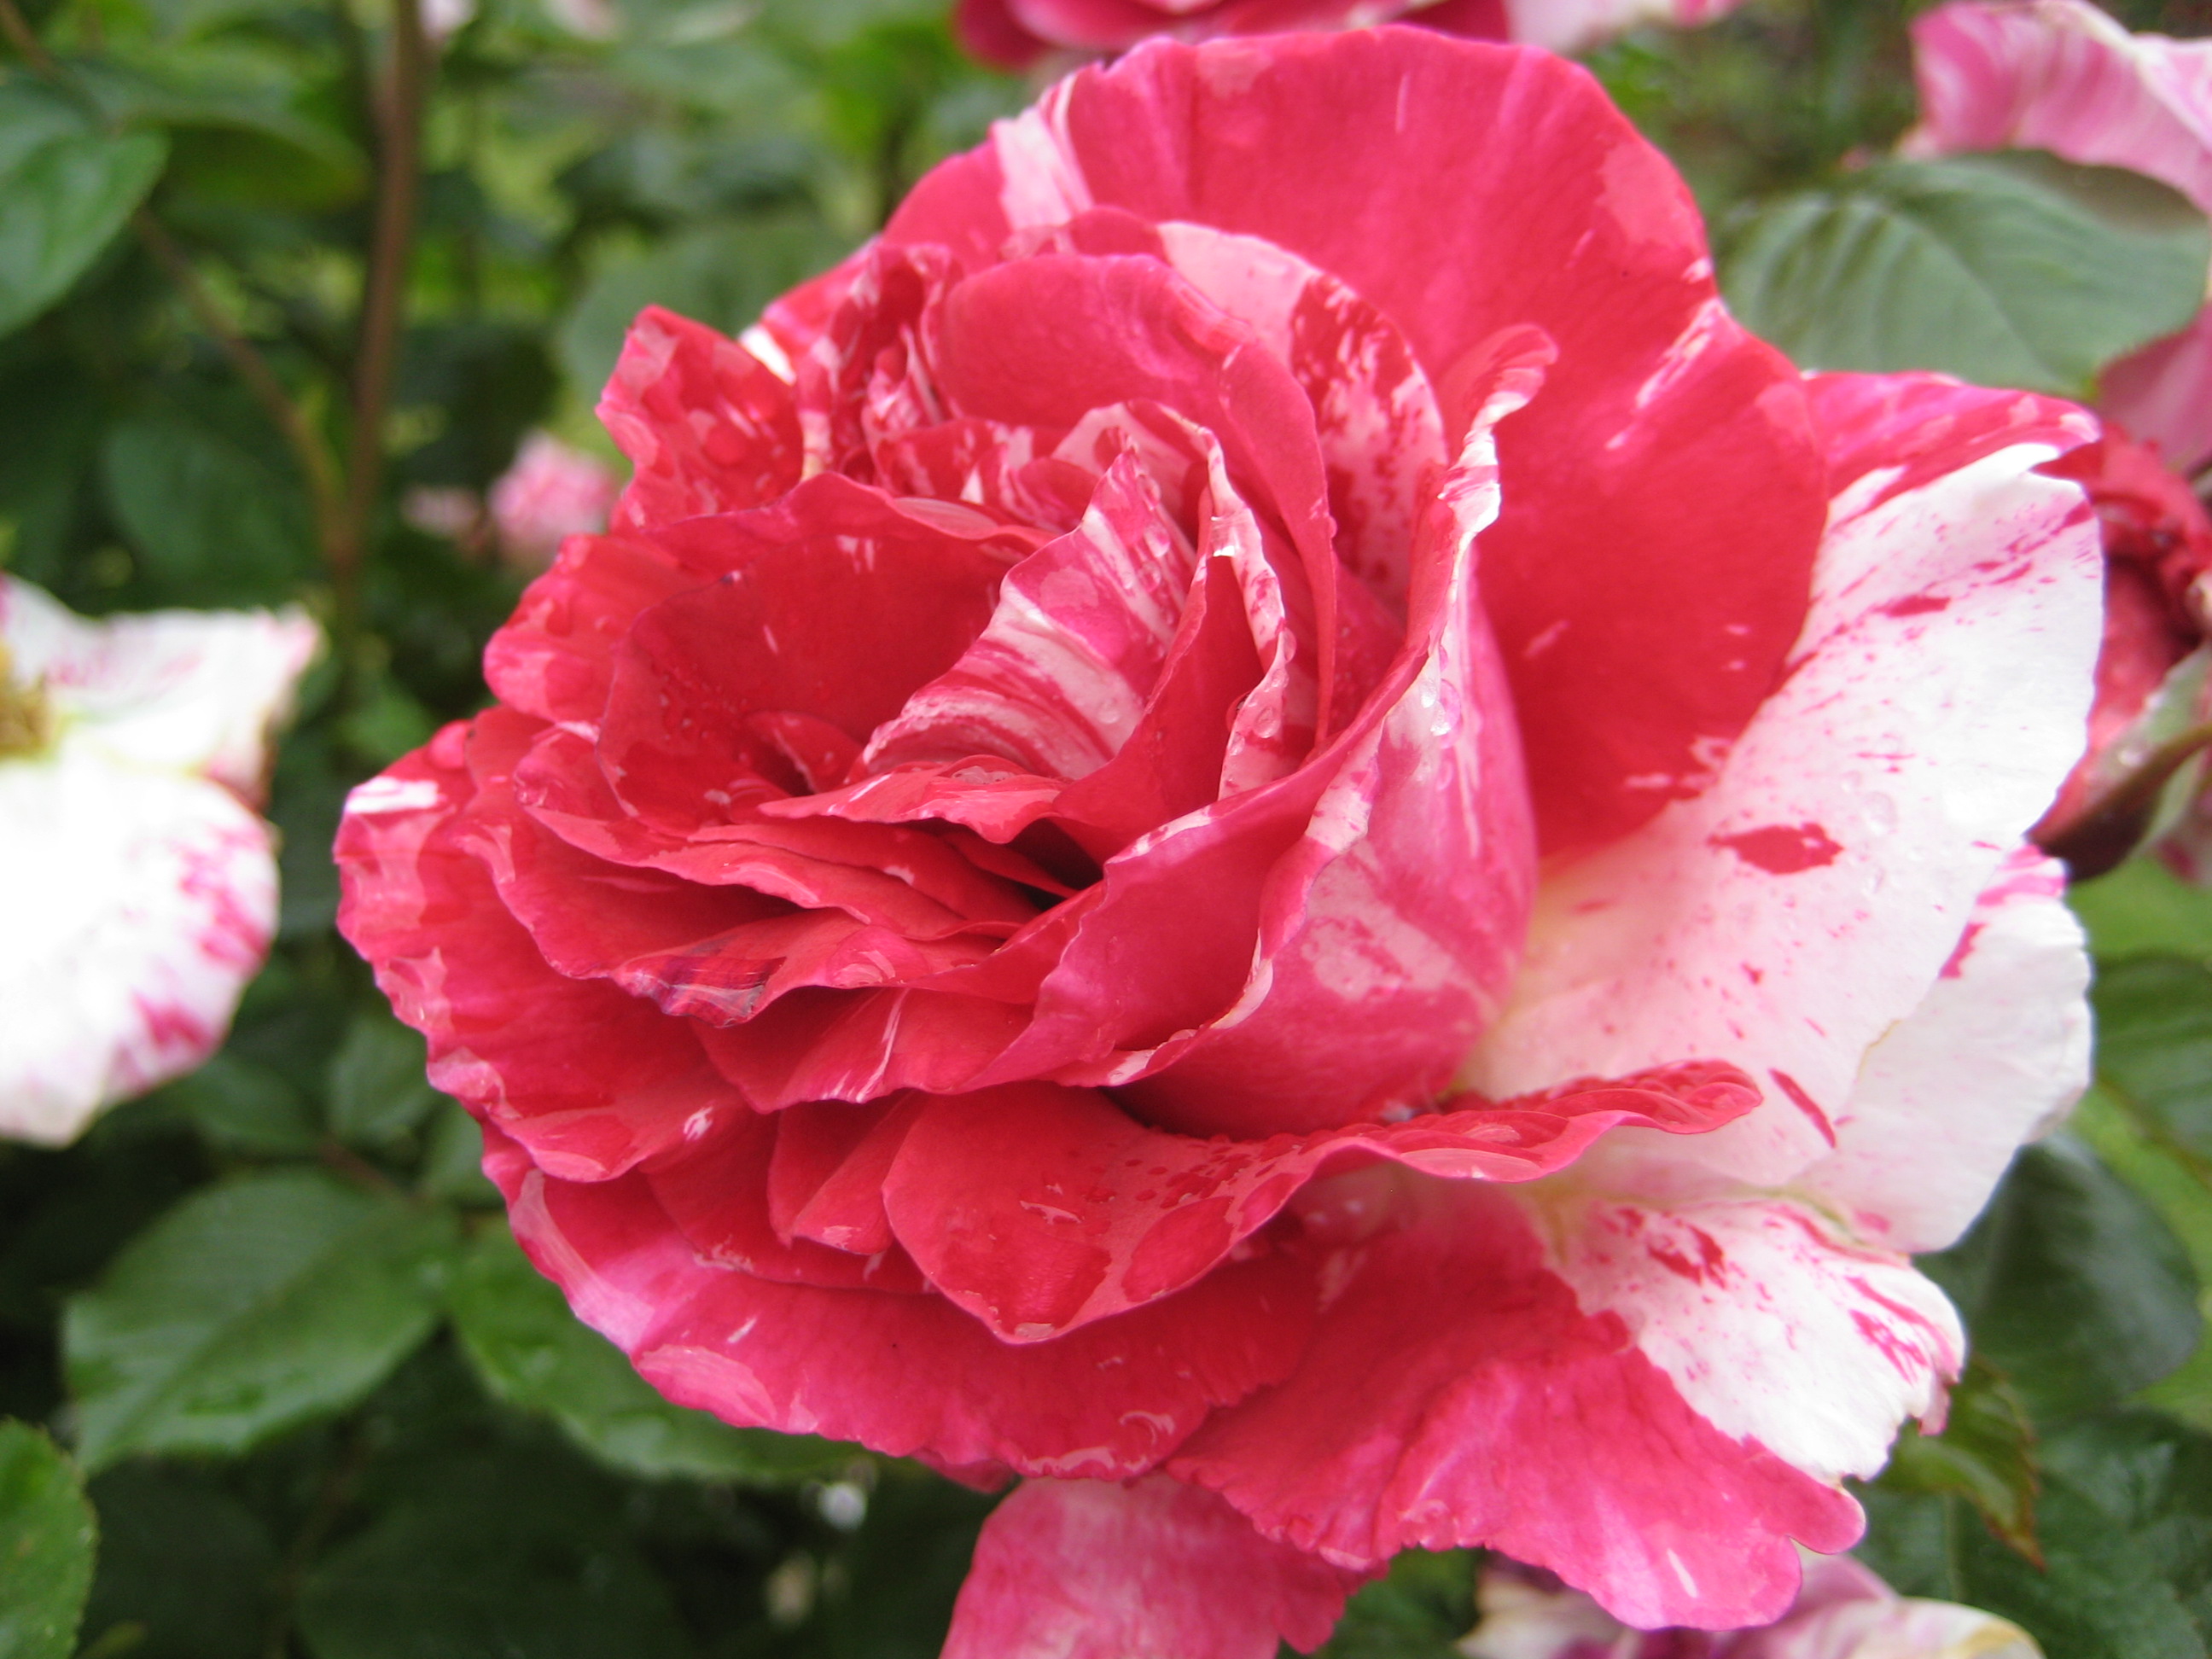 File:Rose Flowers.JPG - Wikimedia Commons